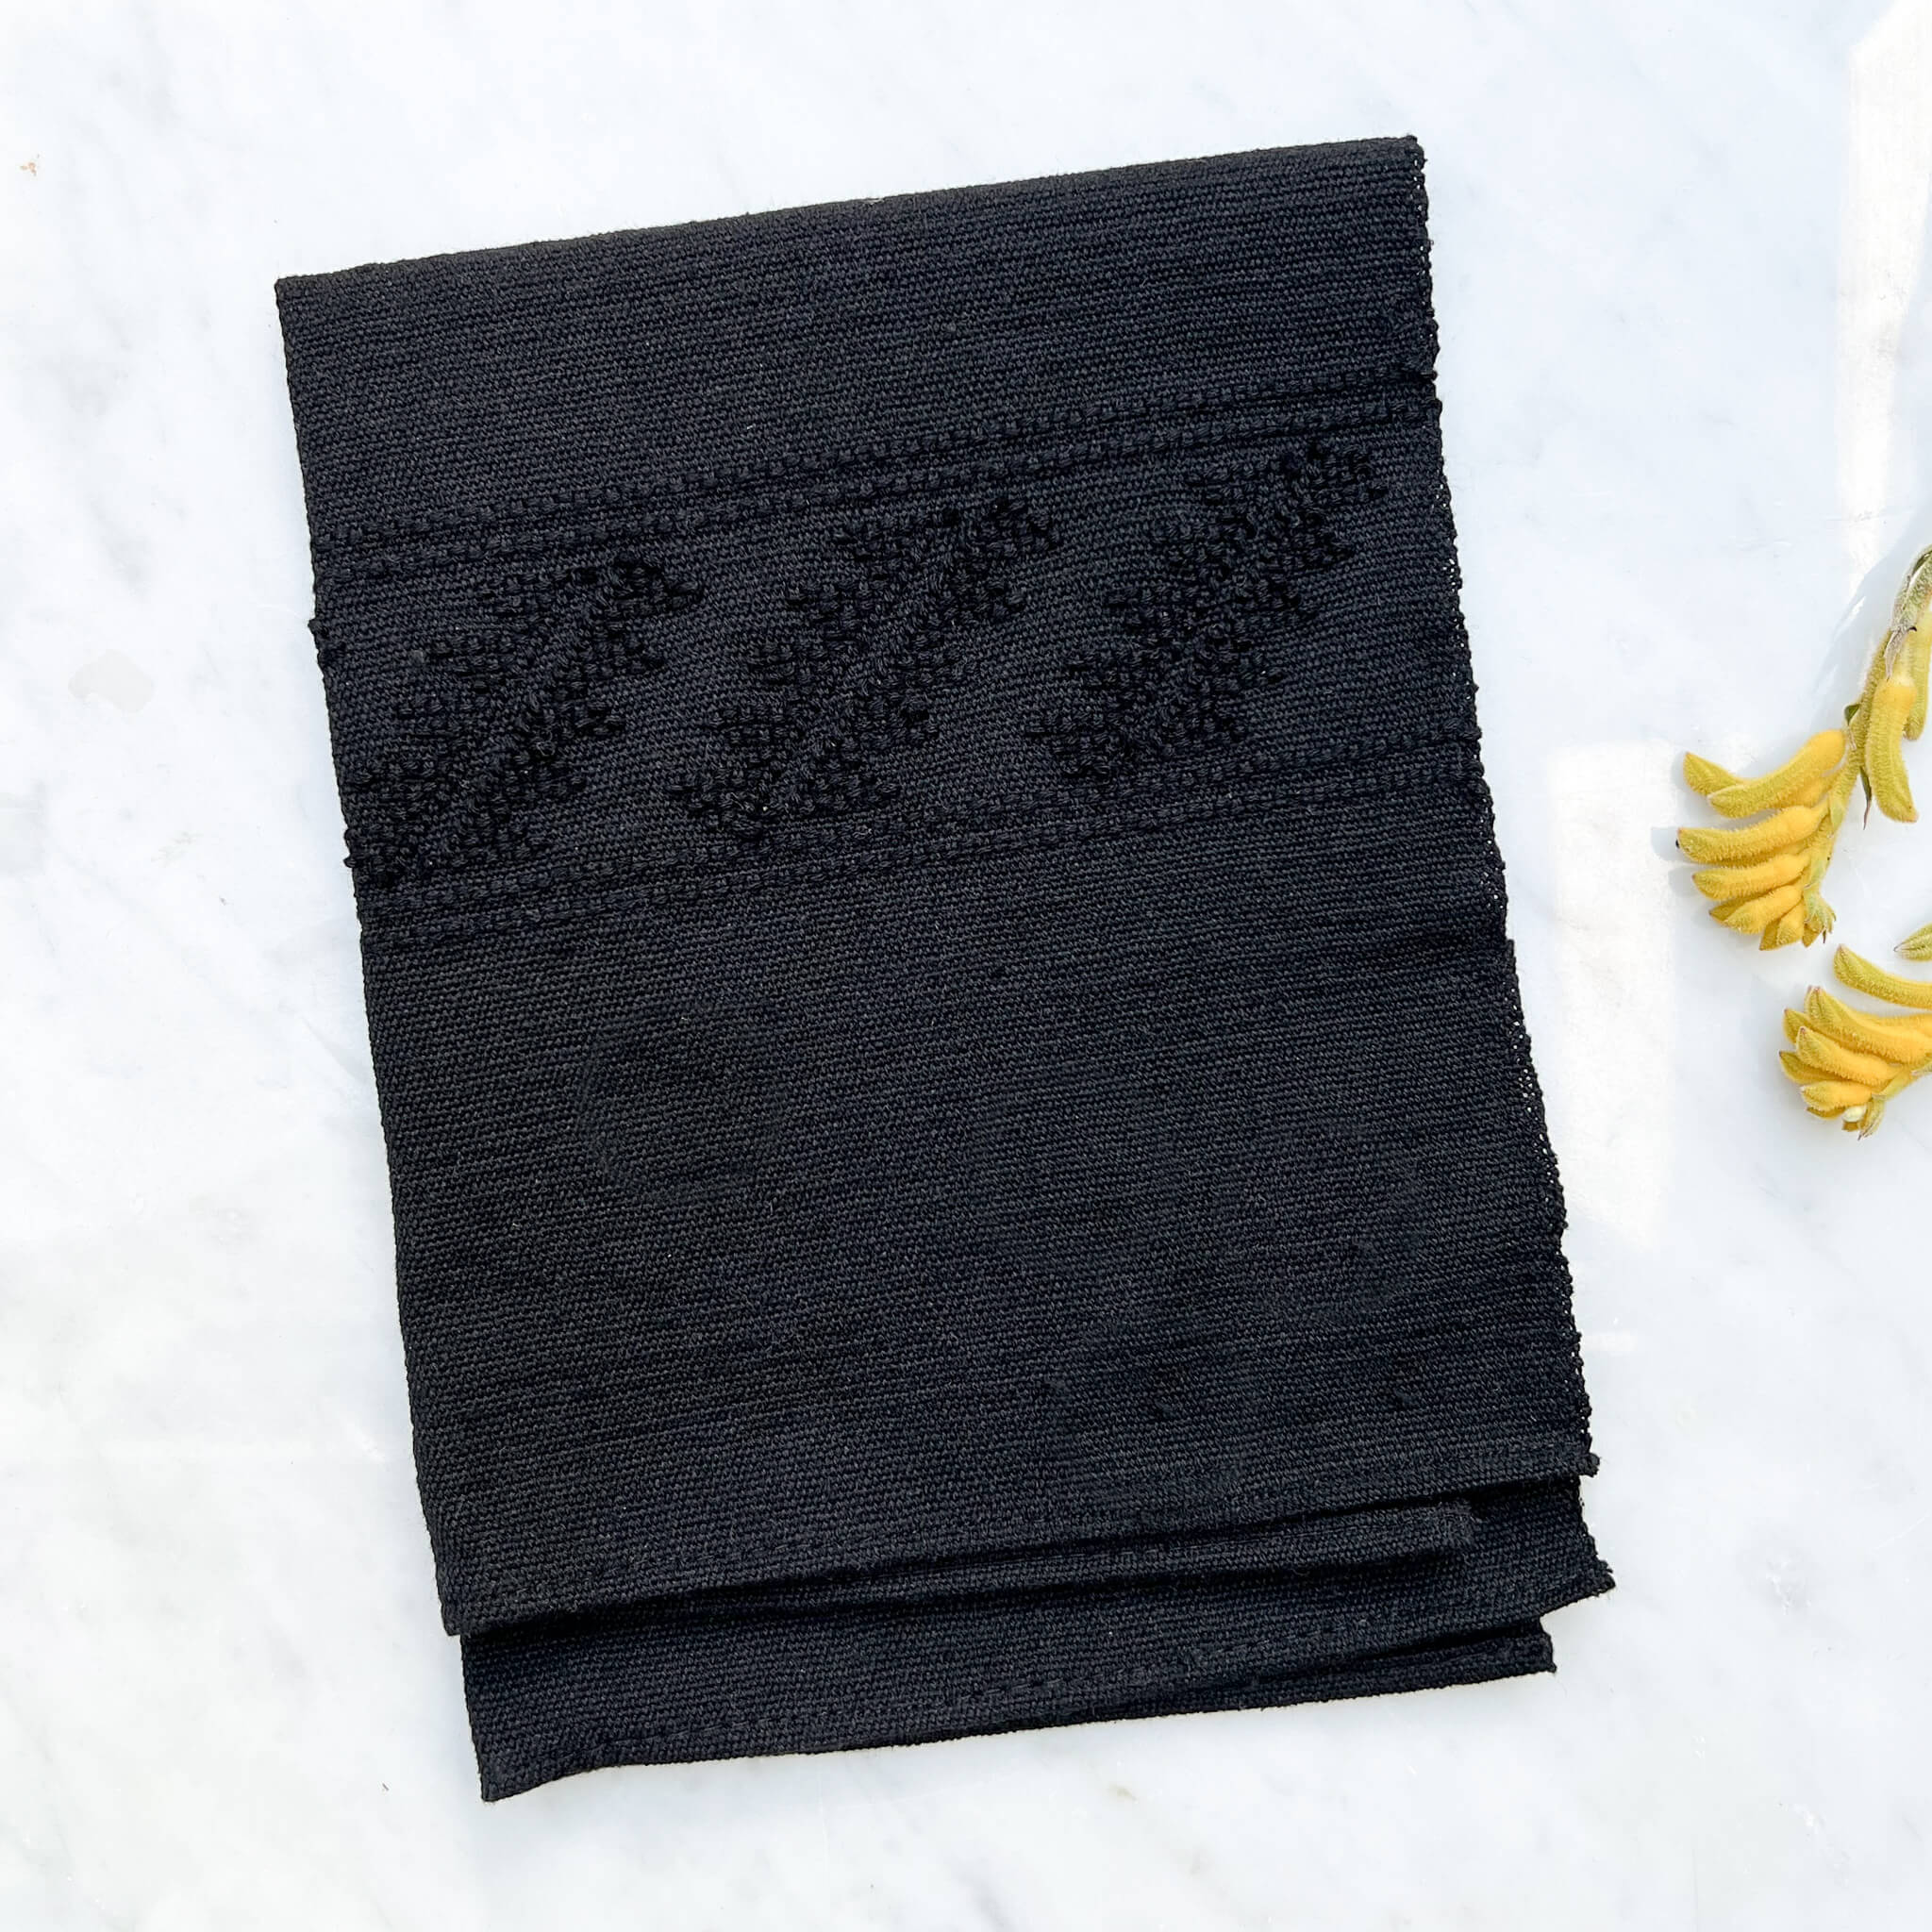 Black cotton napkin handmade in Oaxaca, Mexico.